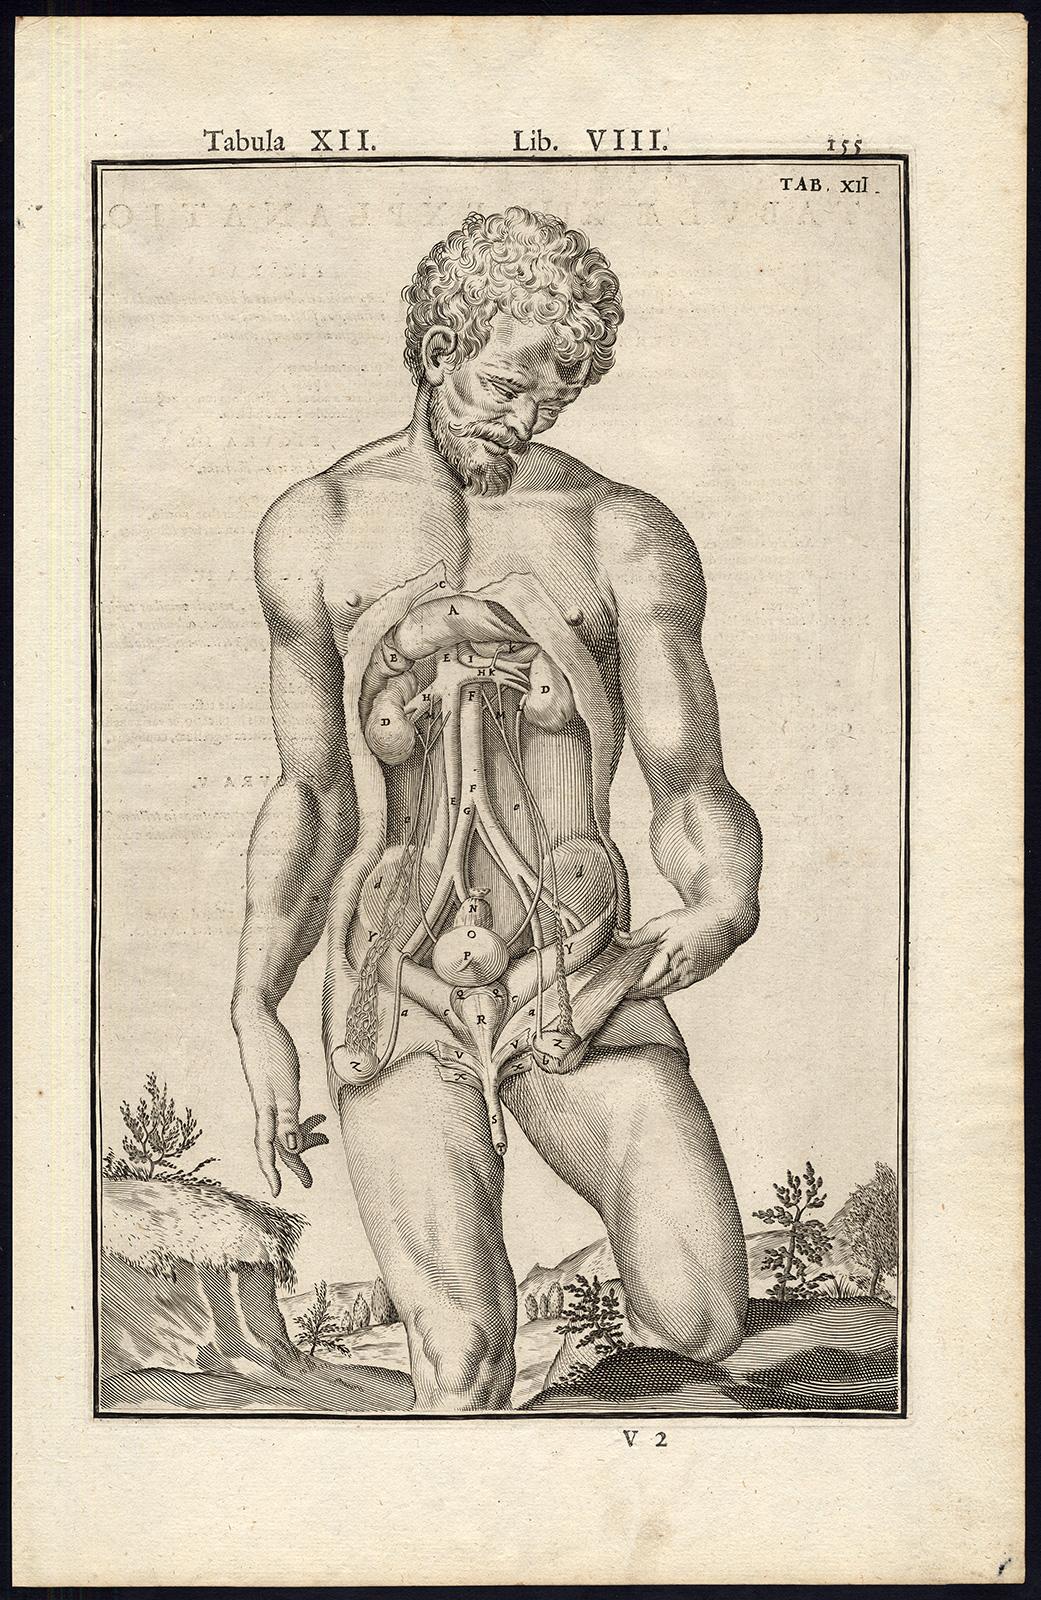 2 anatomical prints - Male organs by Spigelius - Engraving - 17th century - Beige Print by Adrianus Spigelius